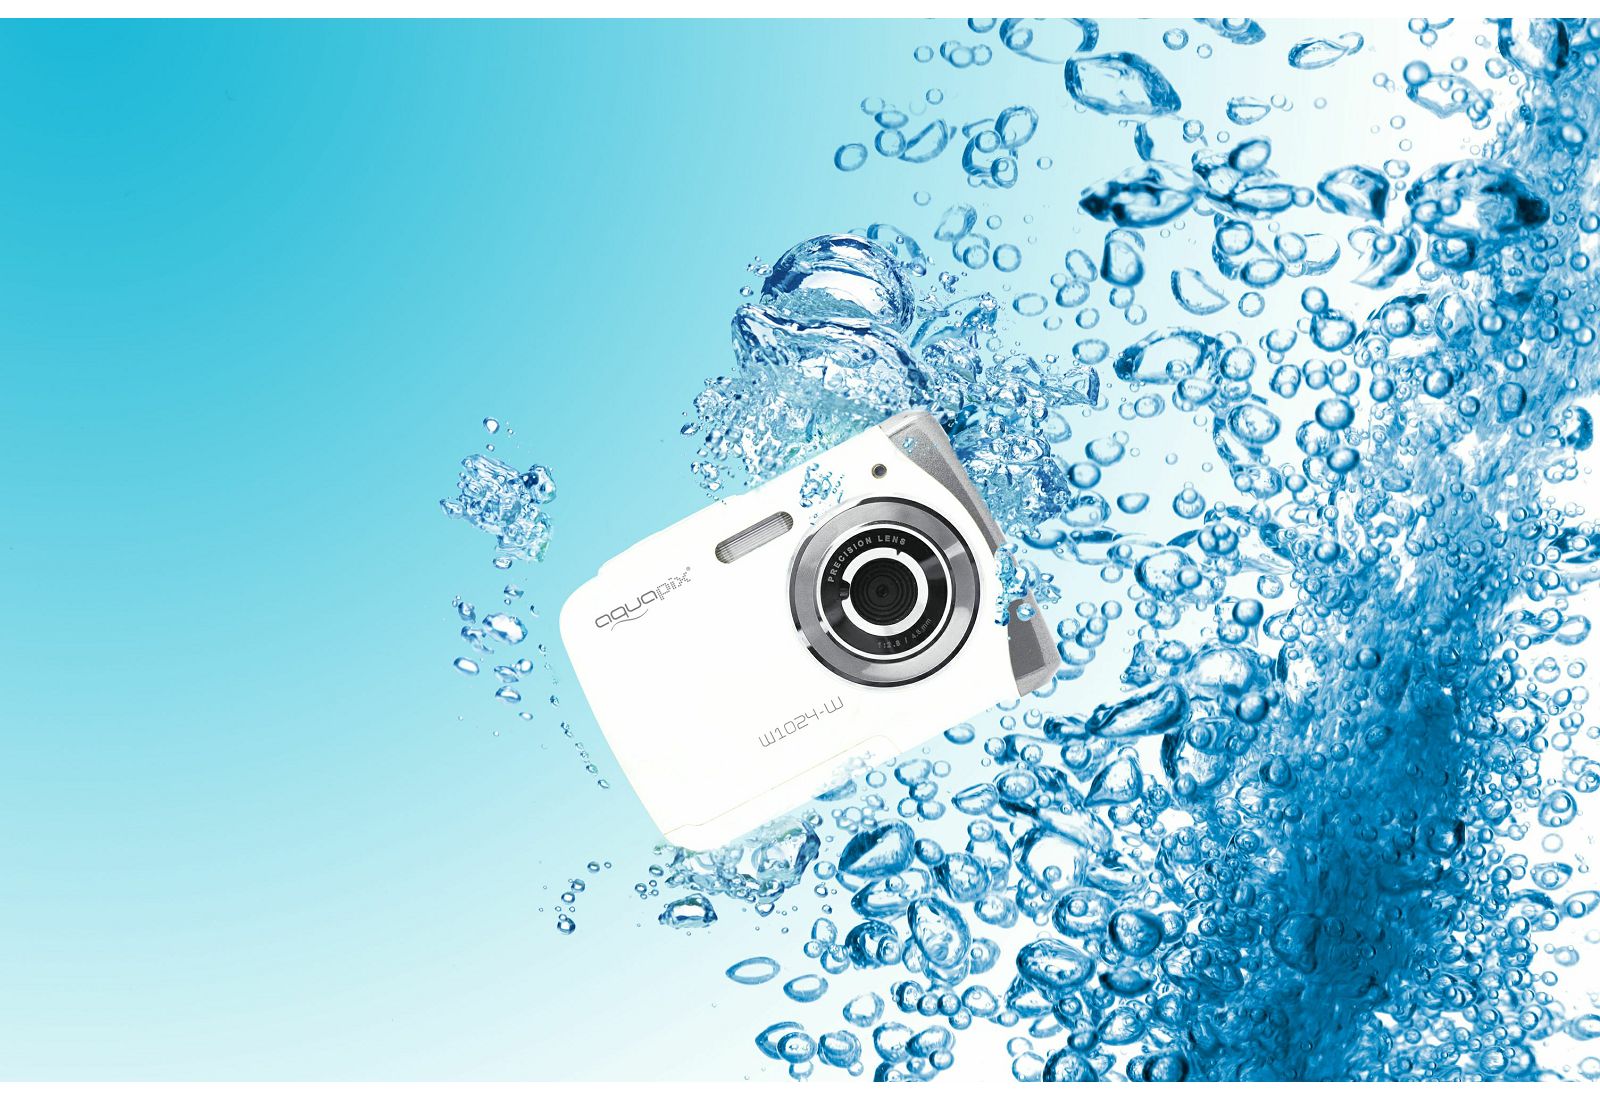 Aquapix W1024-W "Splash" White (10018) 10MP 4x zoom LCD podvodni vodonepropusni digitalni fotoaparat do 3m Waterproof digital camera